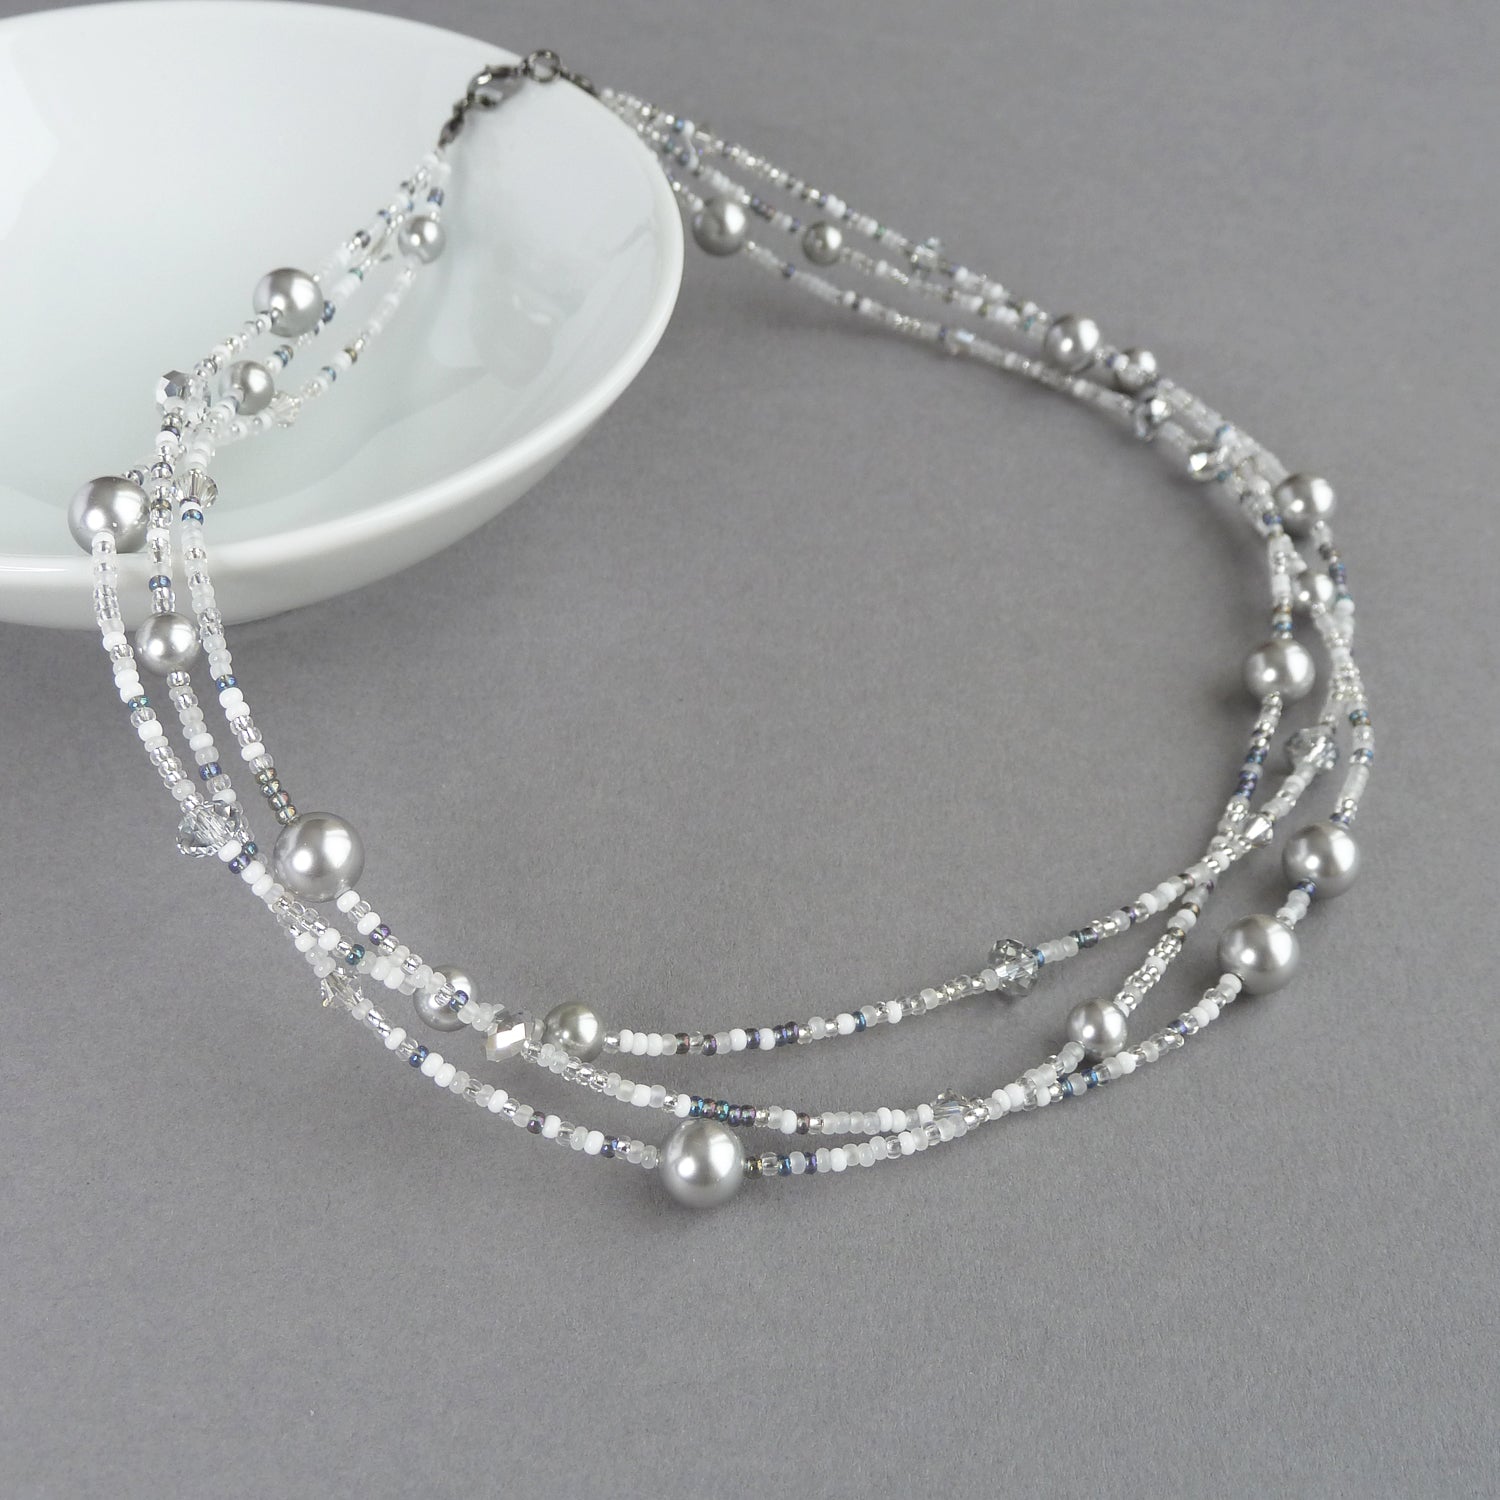 Silver grey multi strand necklace